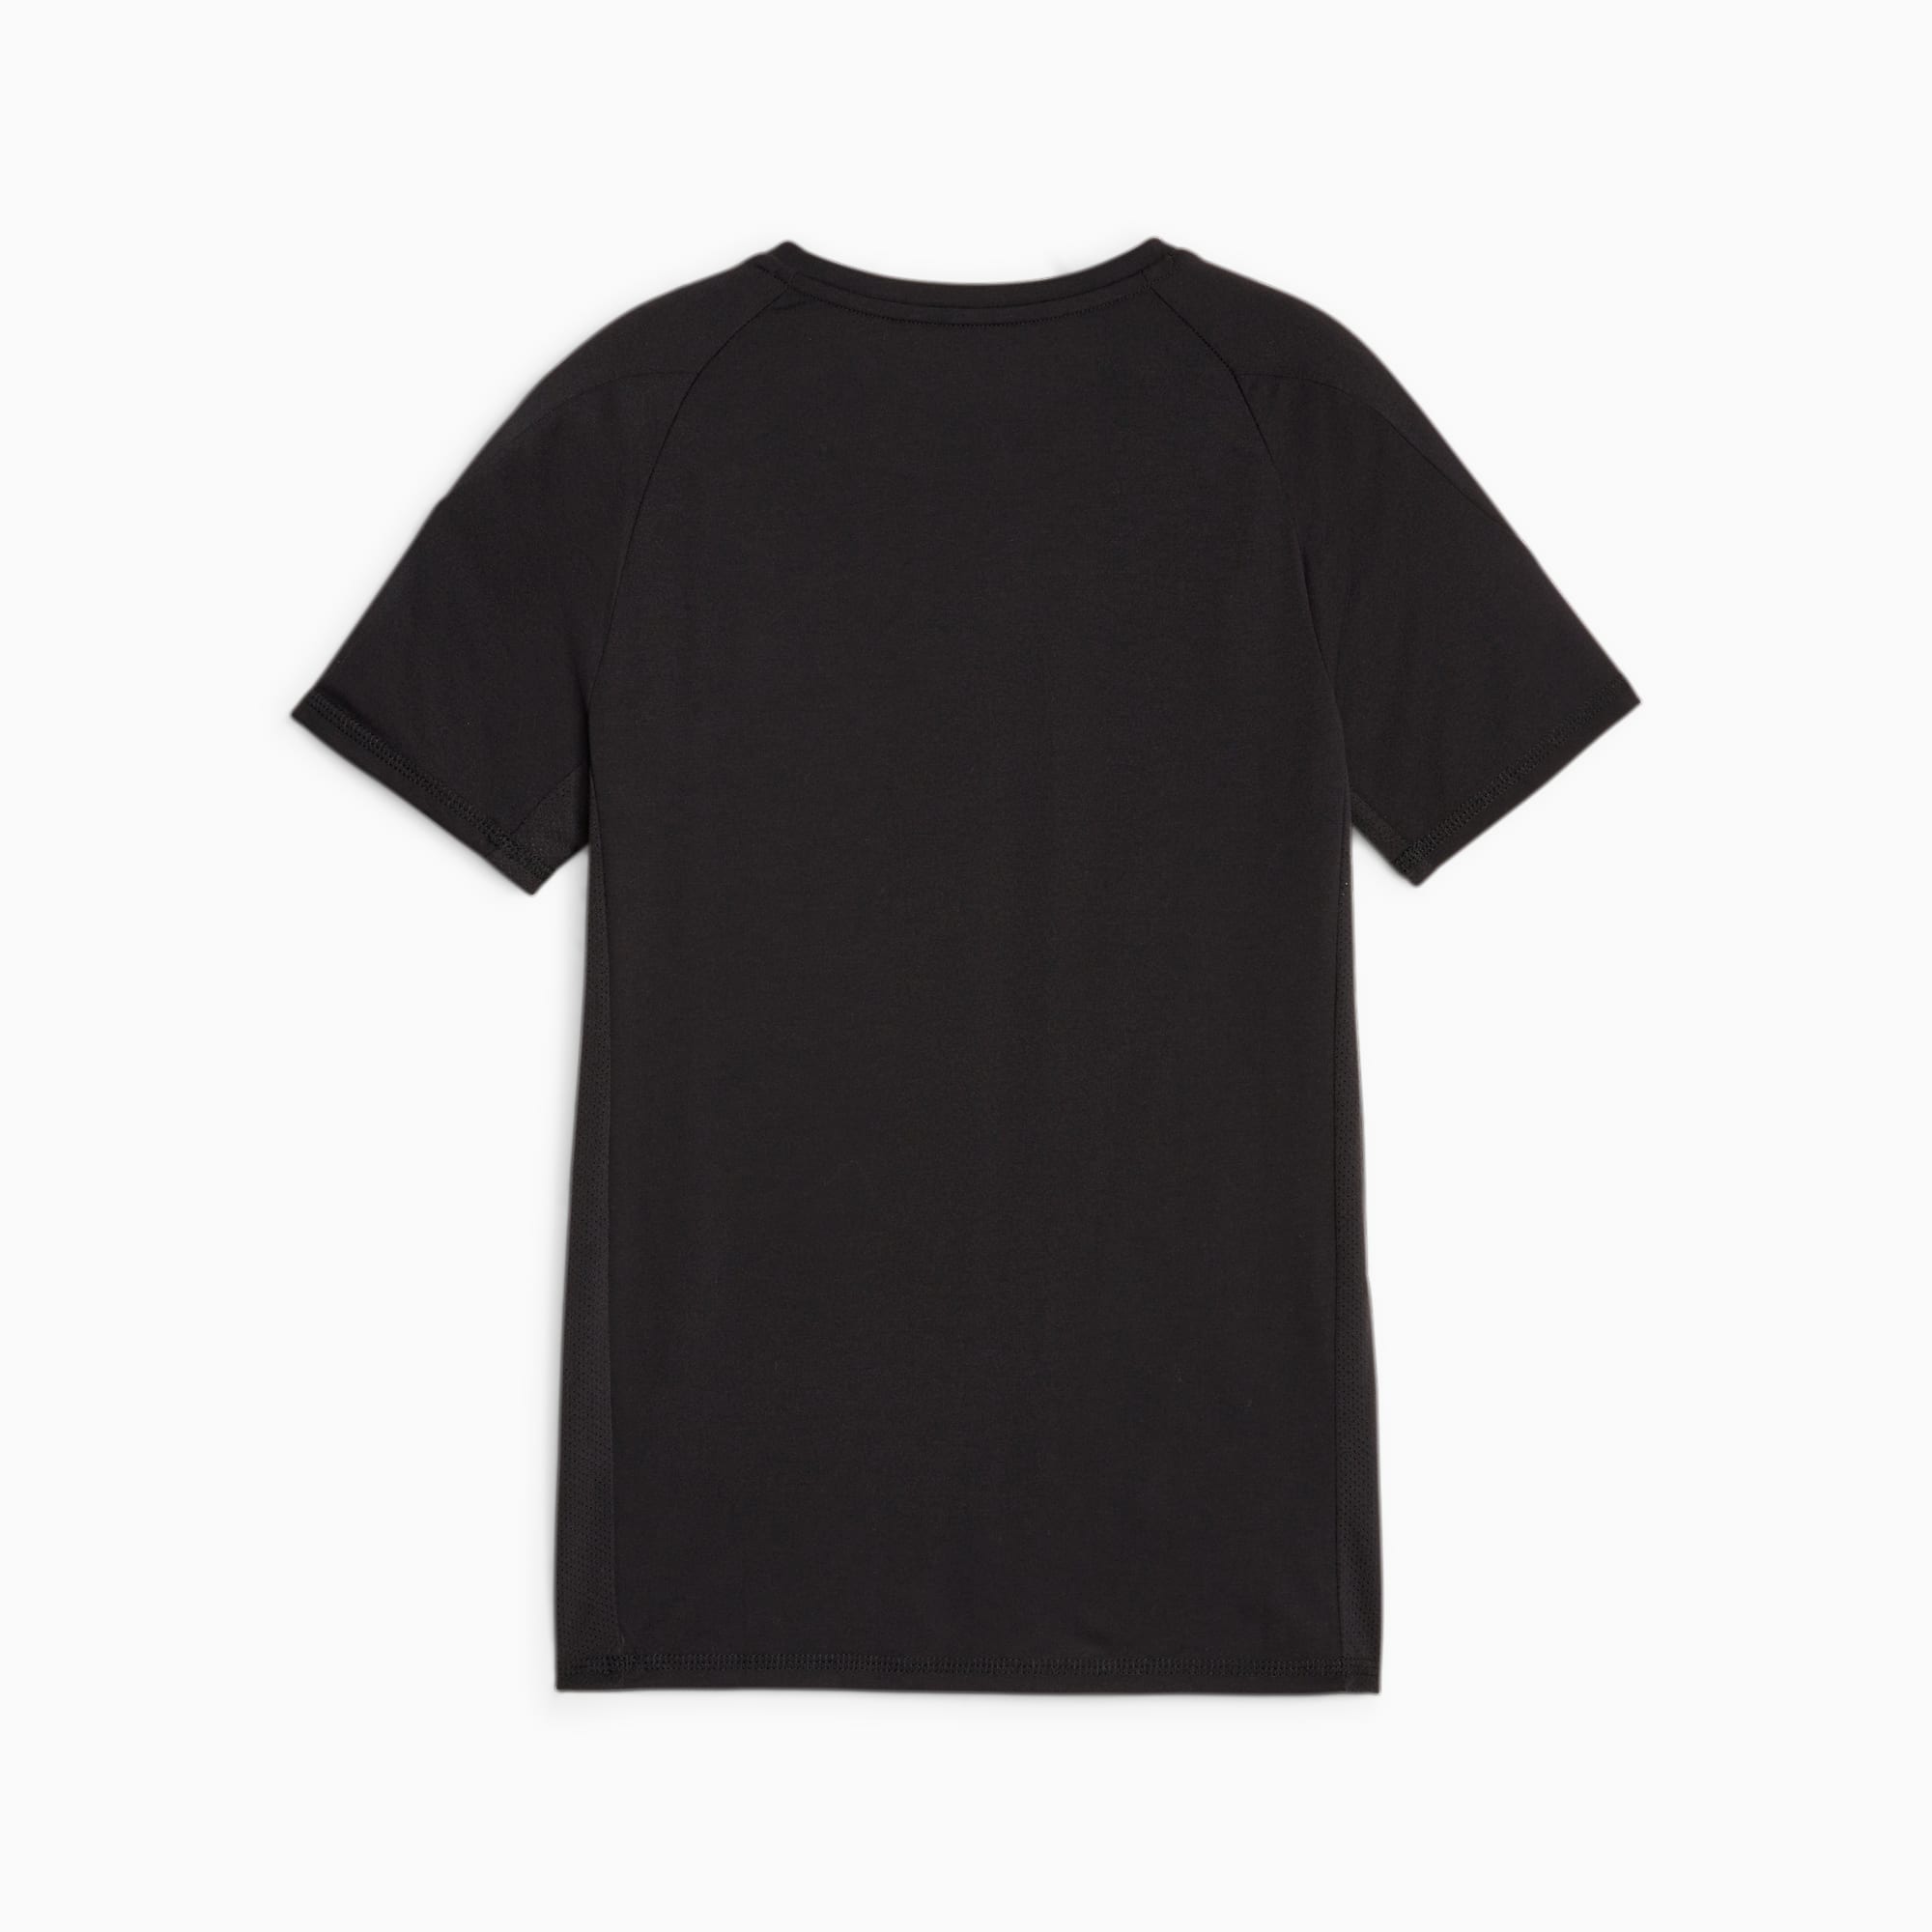 PUMA Evostripe Youth T-Shirt, Black, Size 116, Clothing